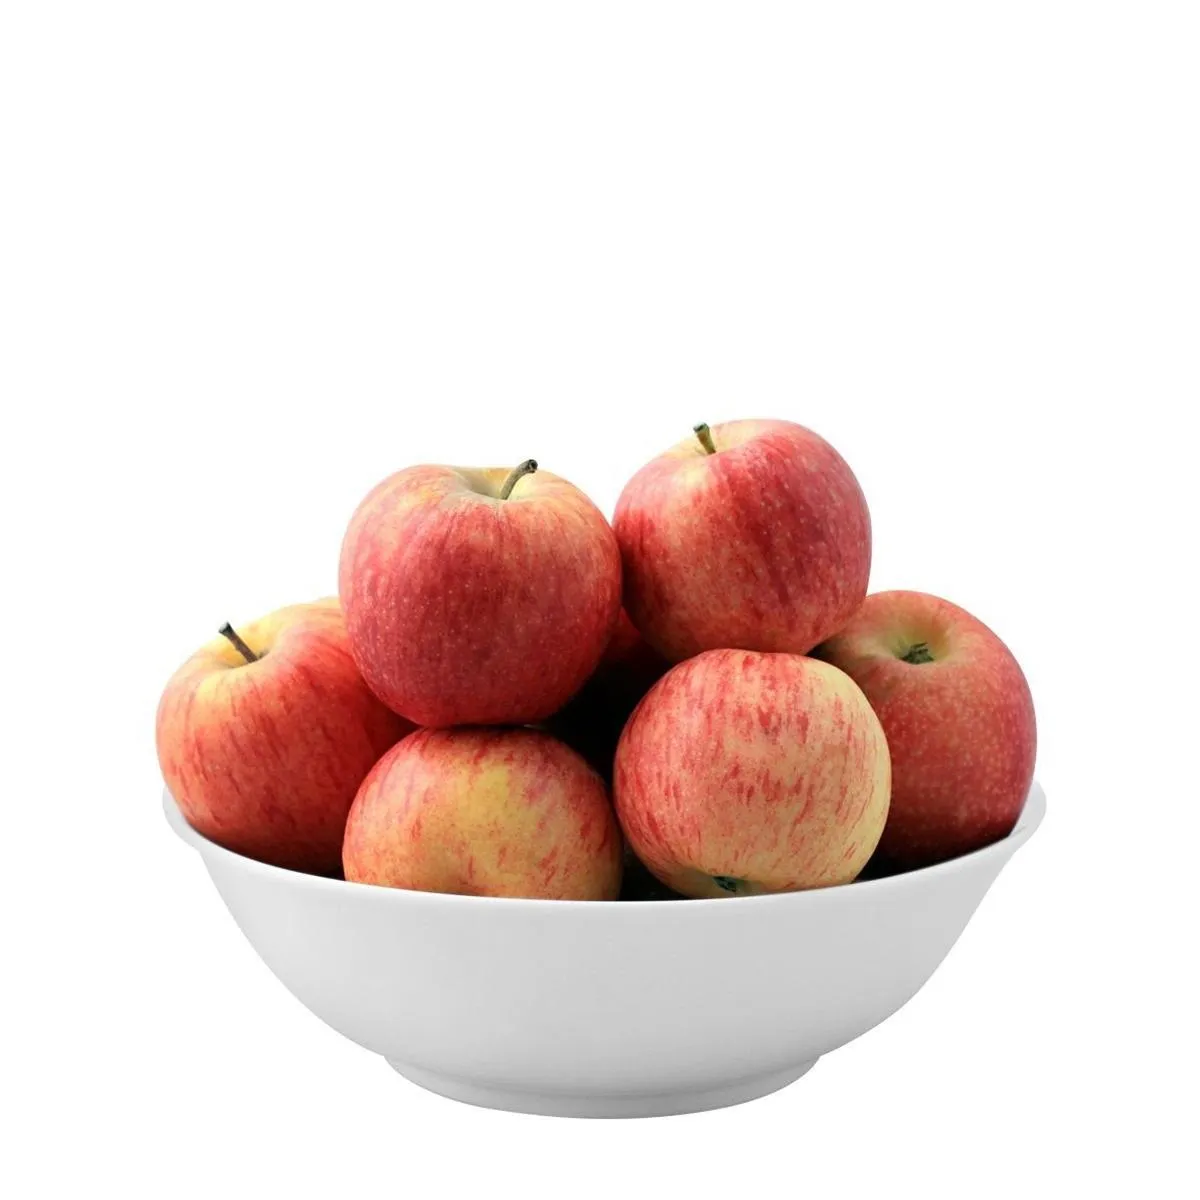 Buy gala apple per pound types + price